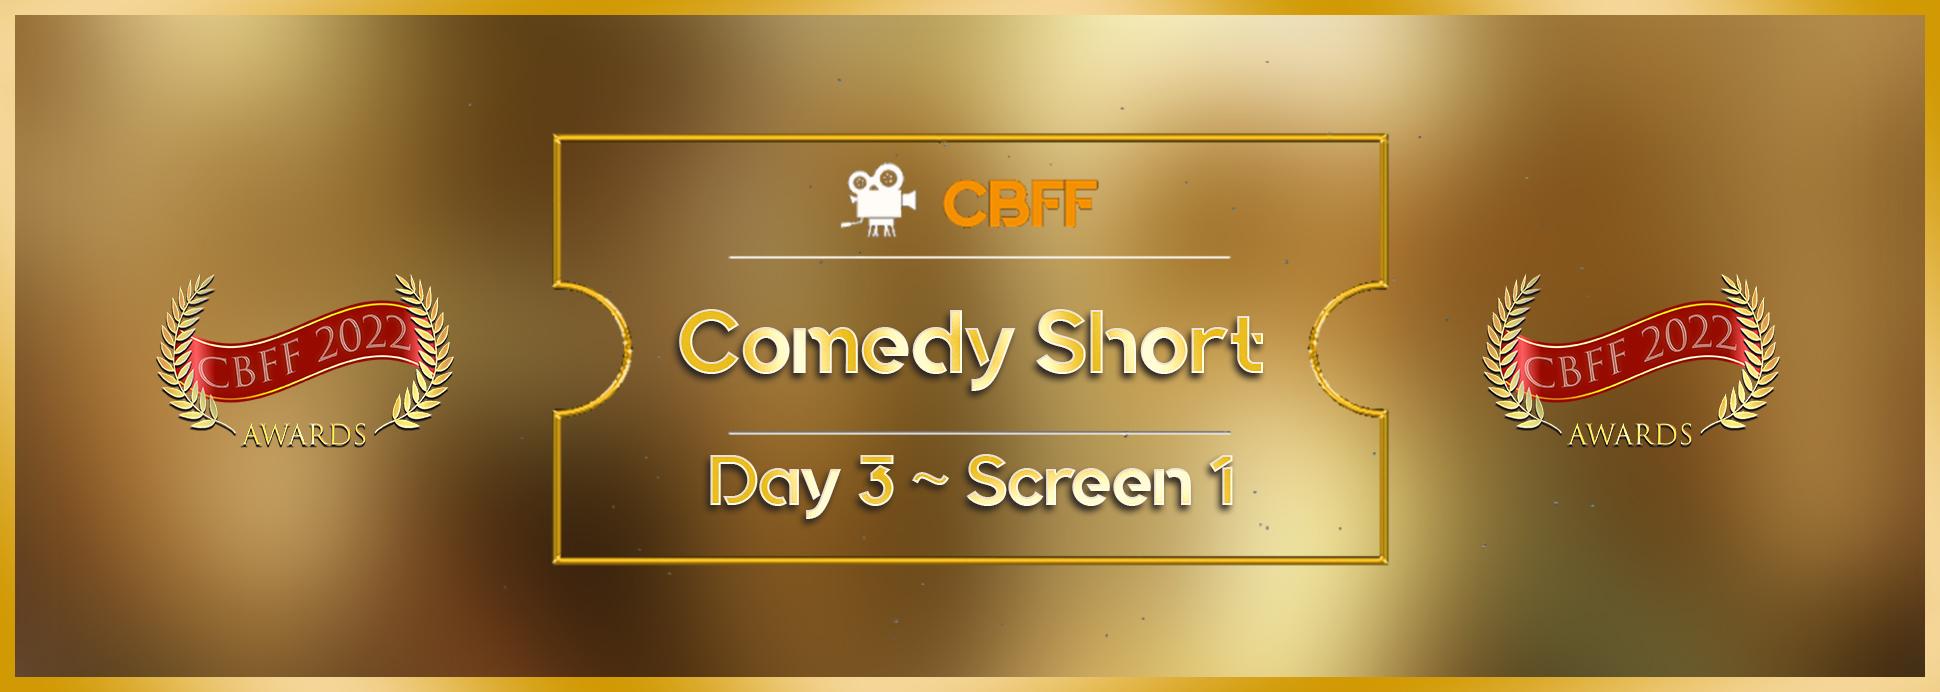 Day 3 Screen 1 Short Comedy